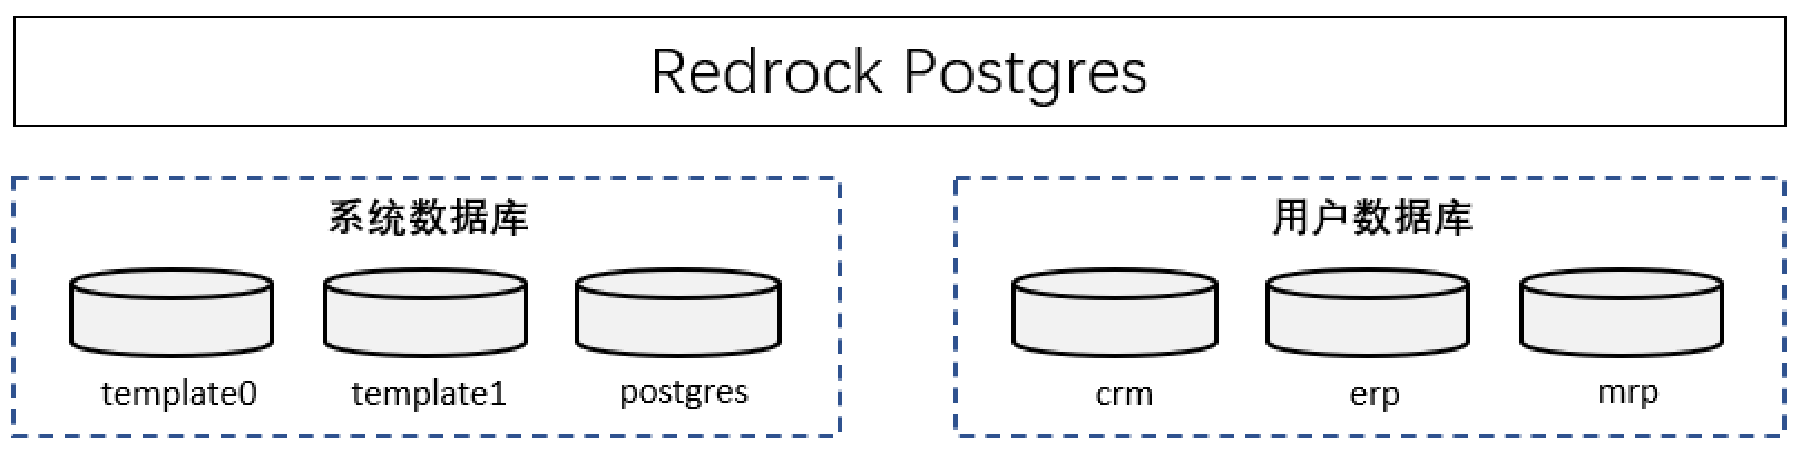 图 1 一个 Redrock Postgres 实例